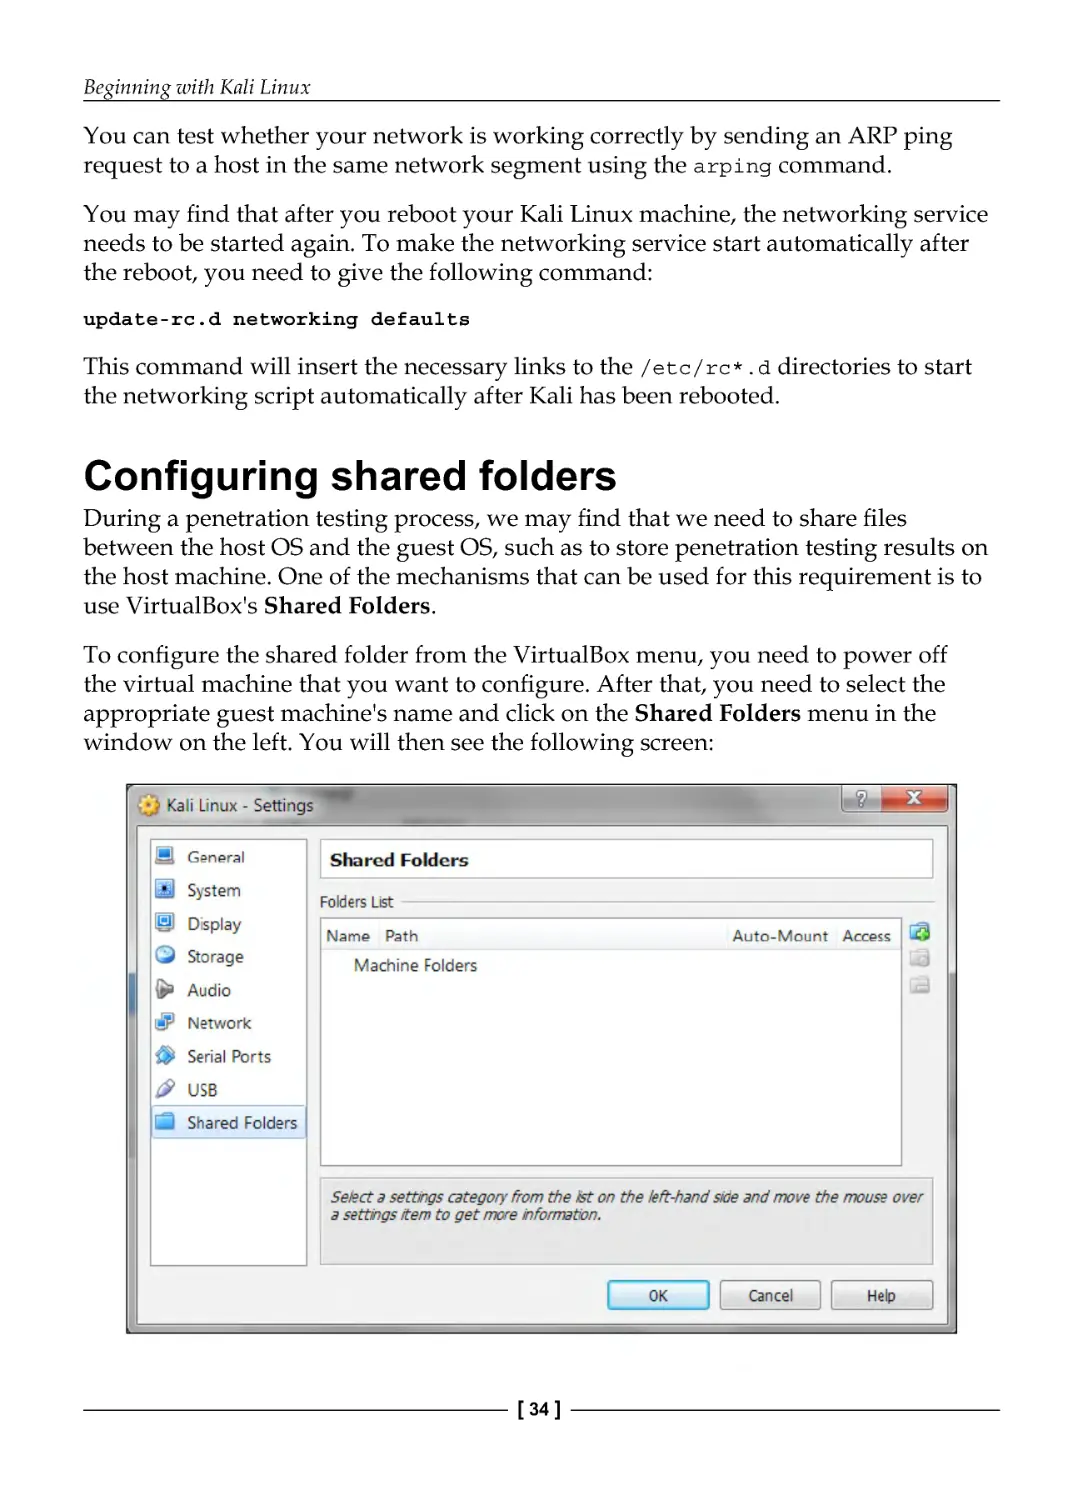 Configuring shared folders